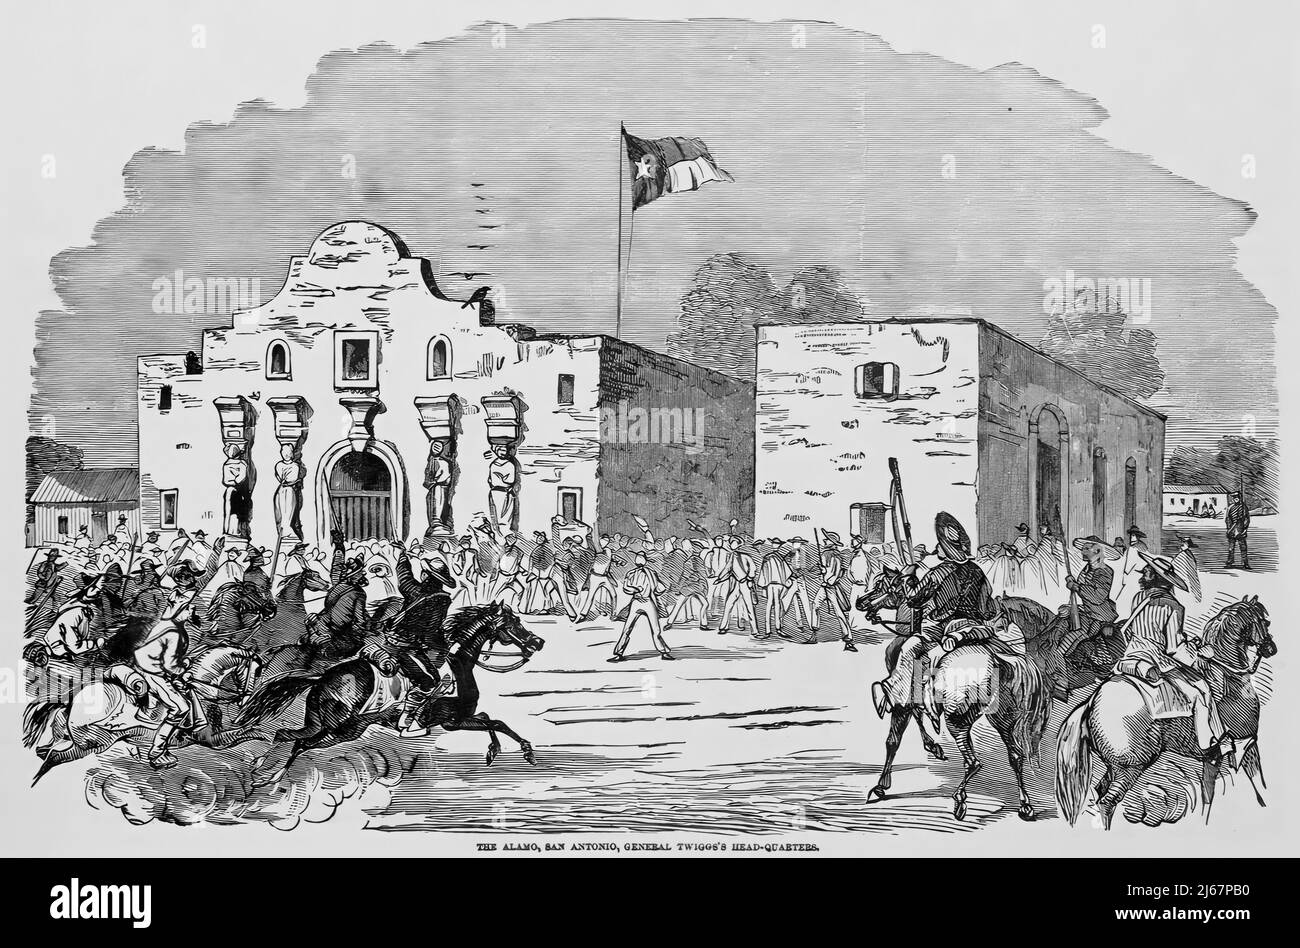 The Alamo, San Antonio, Texas, General David Emanuel Twiggs' Headquarters in the American Civil War. 19th century illustration Stock Photo